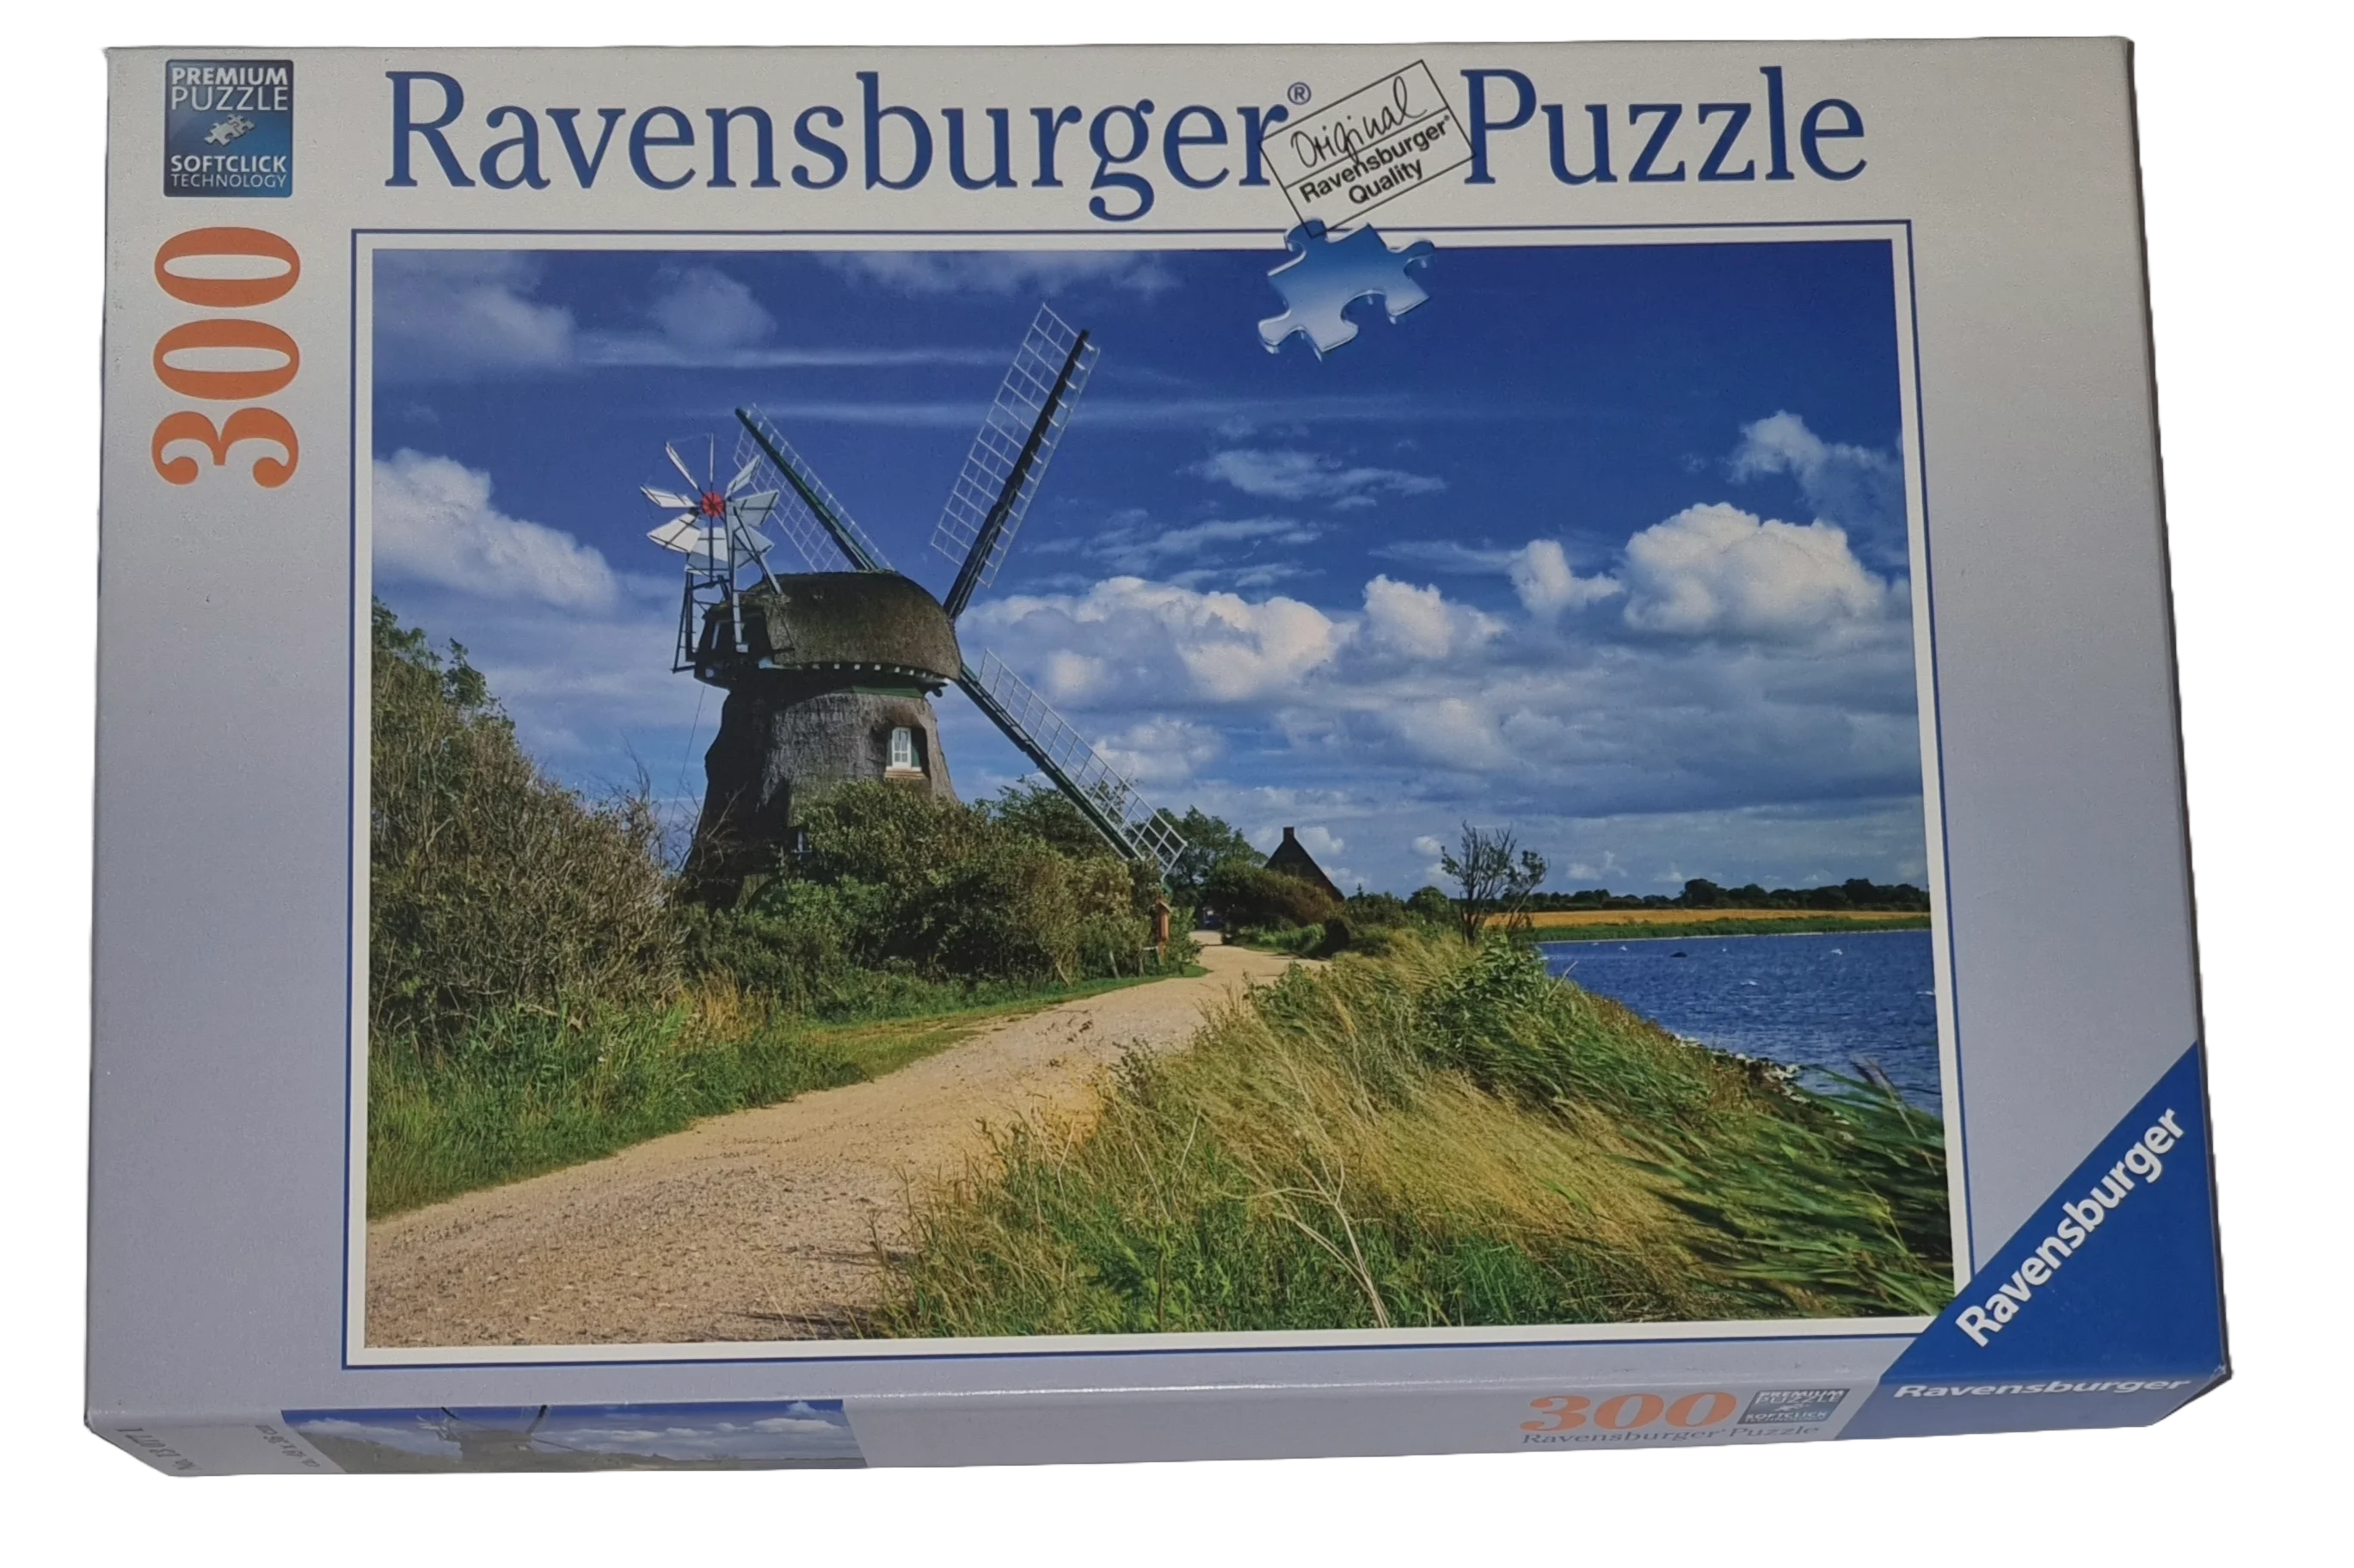 Ravensburger Premium softclick Puzzle 300 Teile 130771 Windmühle Charlotte, Geitinger Blick